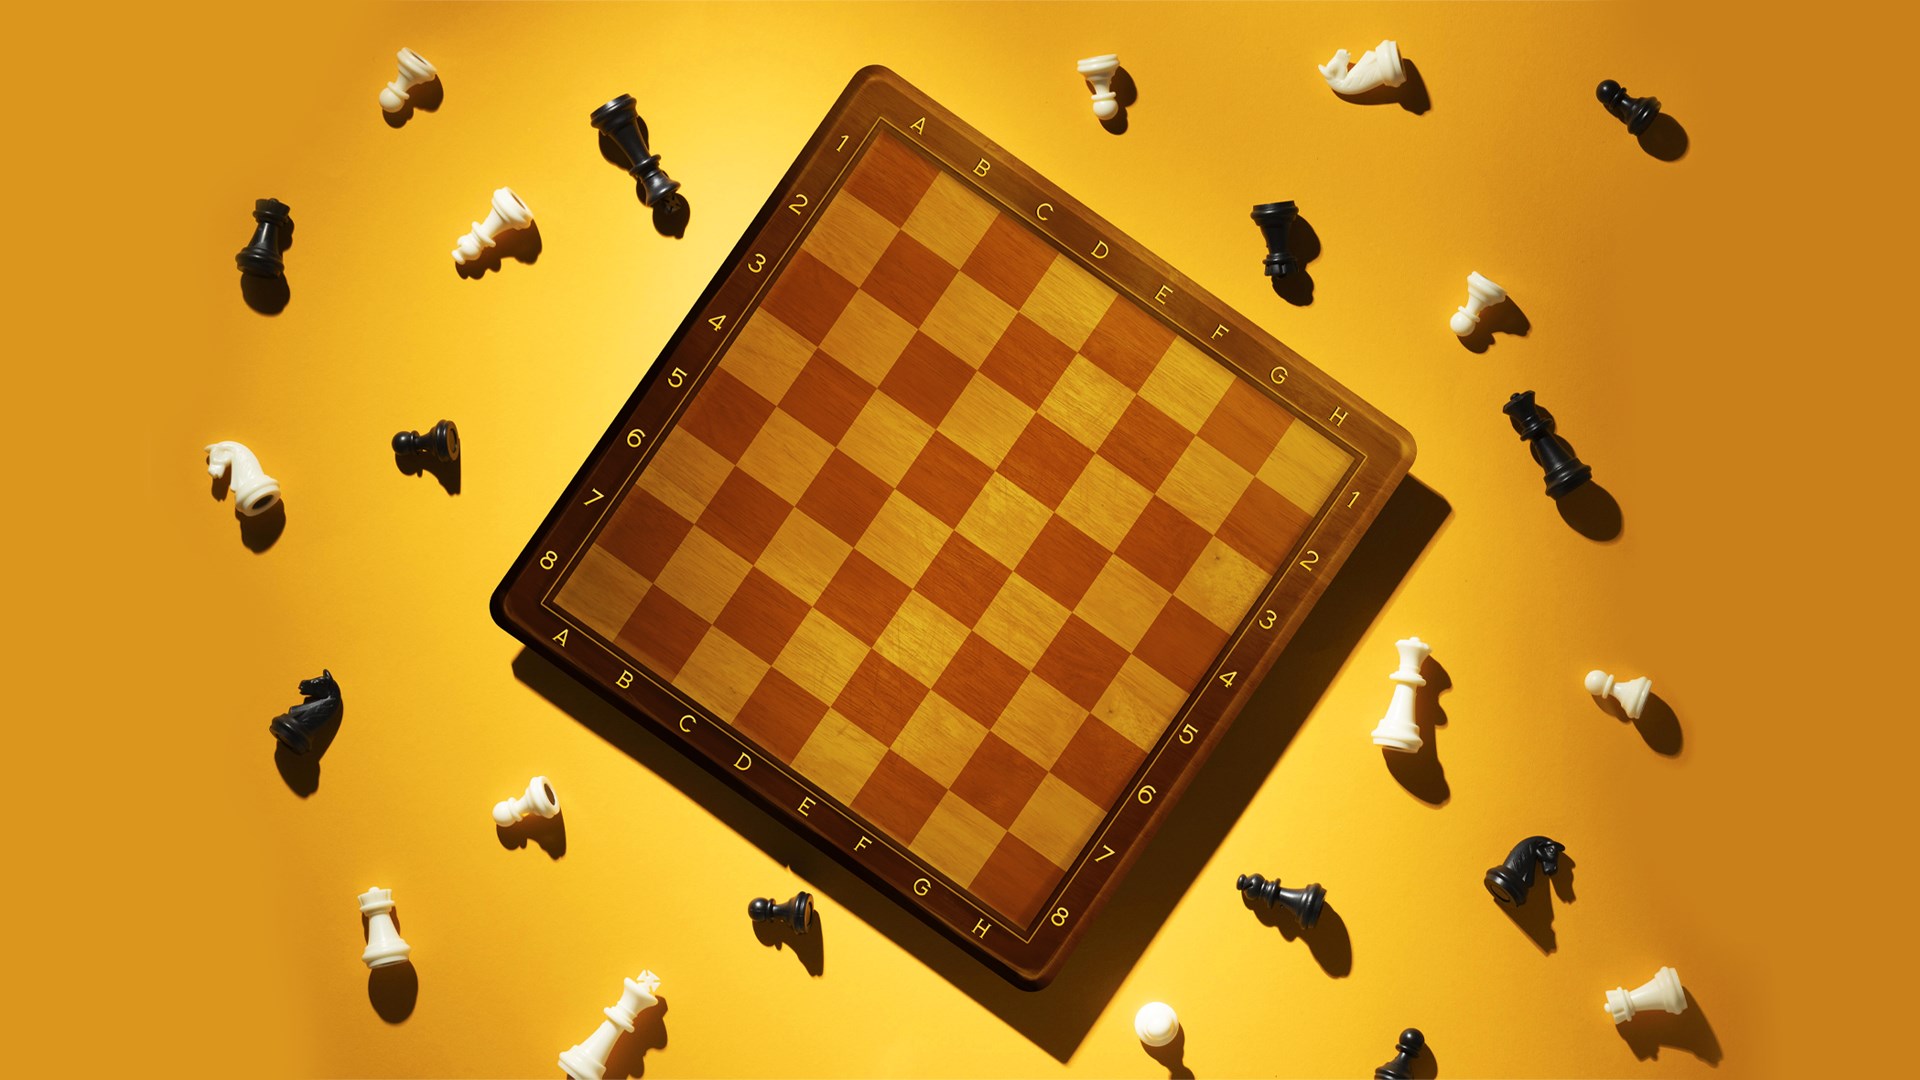 Feb. 10, 1996: Checkmate!